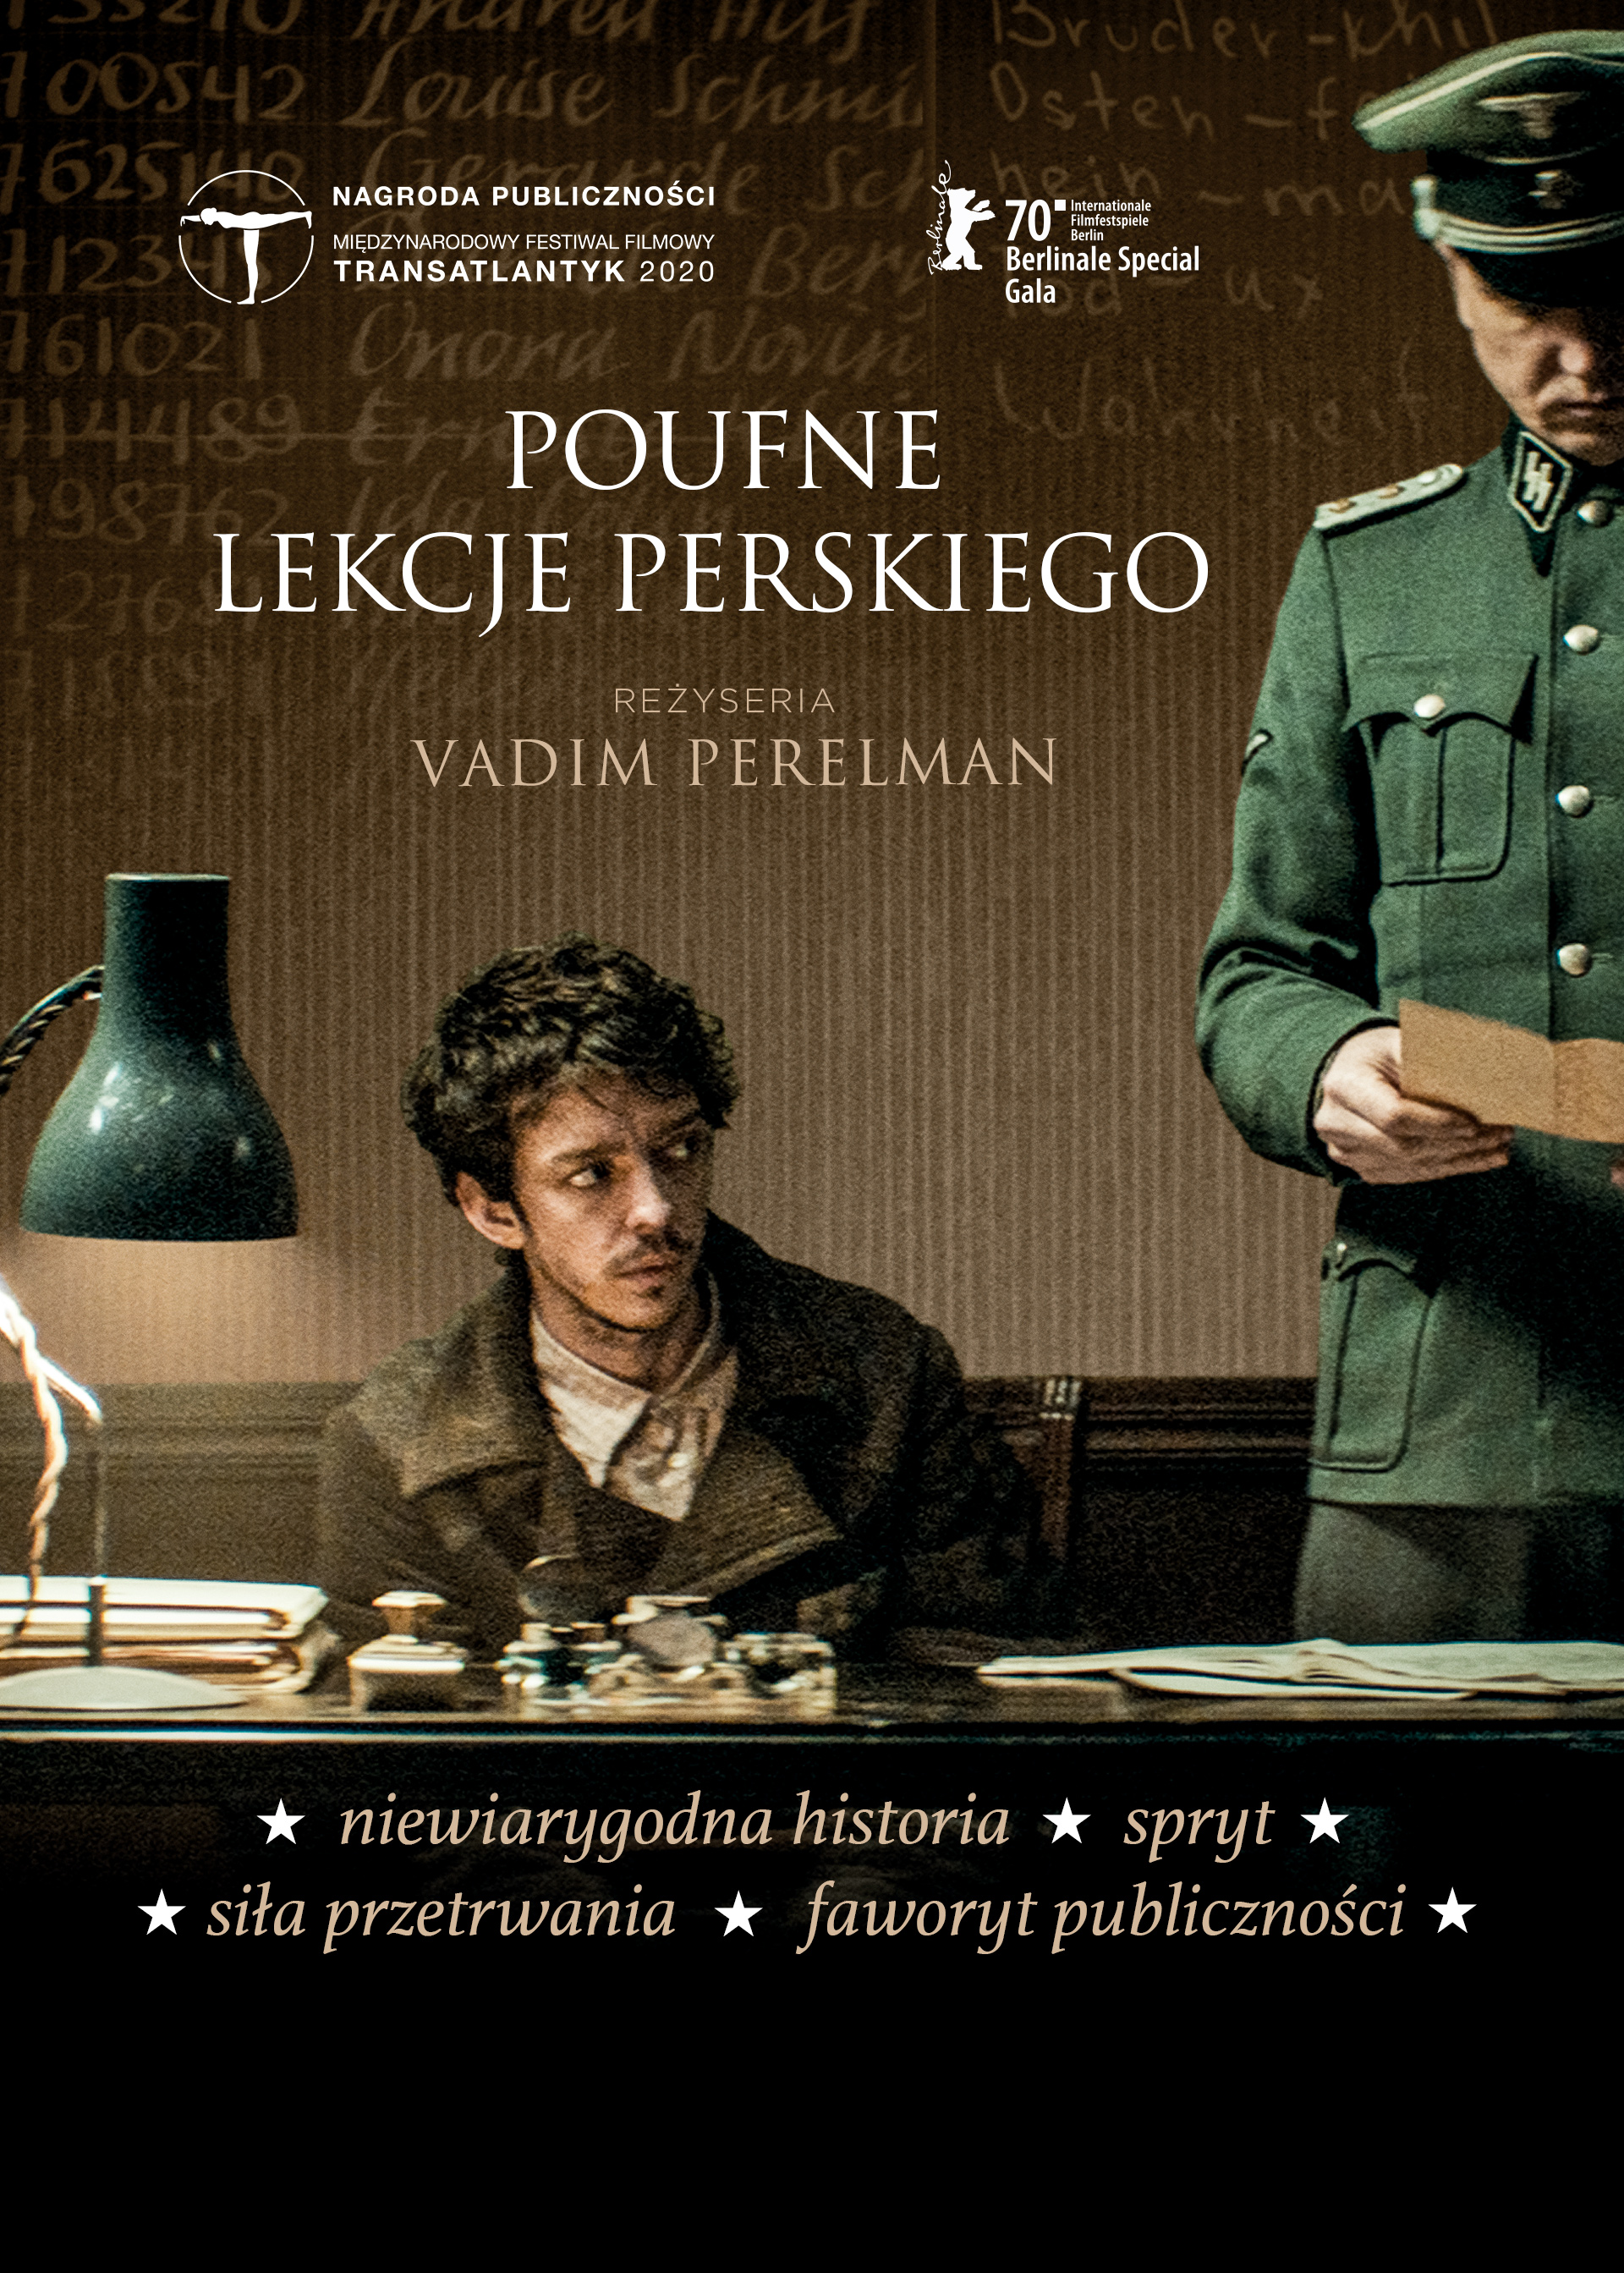 file_plperskiego-plakat.jpg